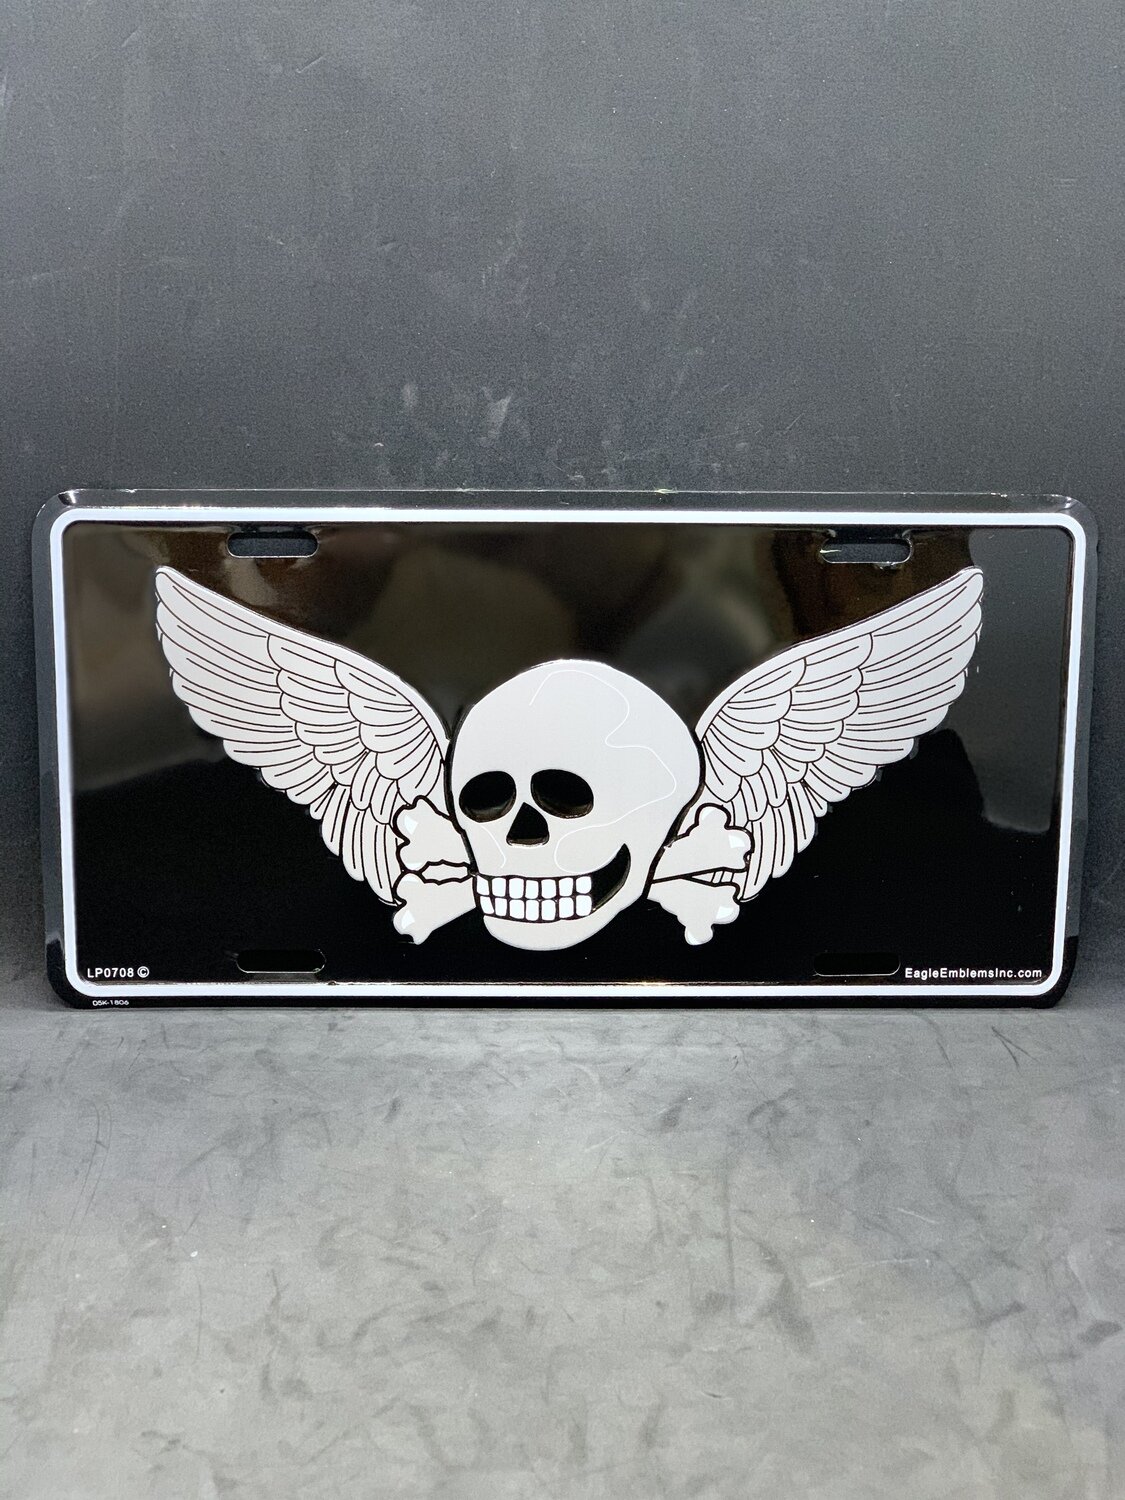 Skull/Wings License Plate